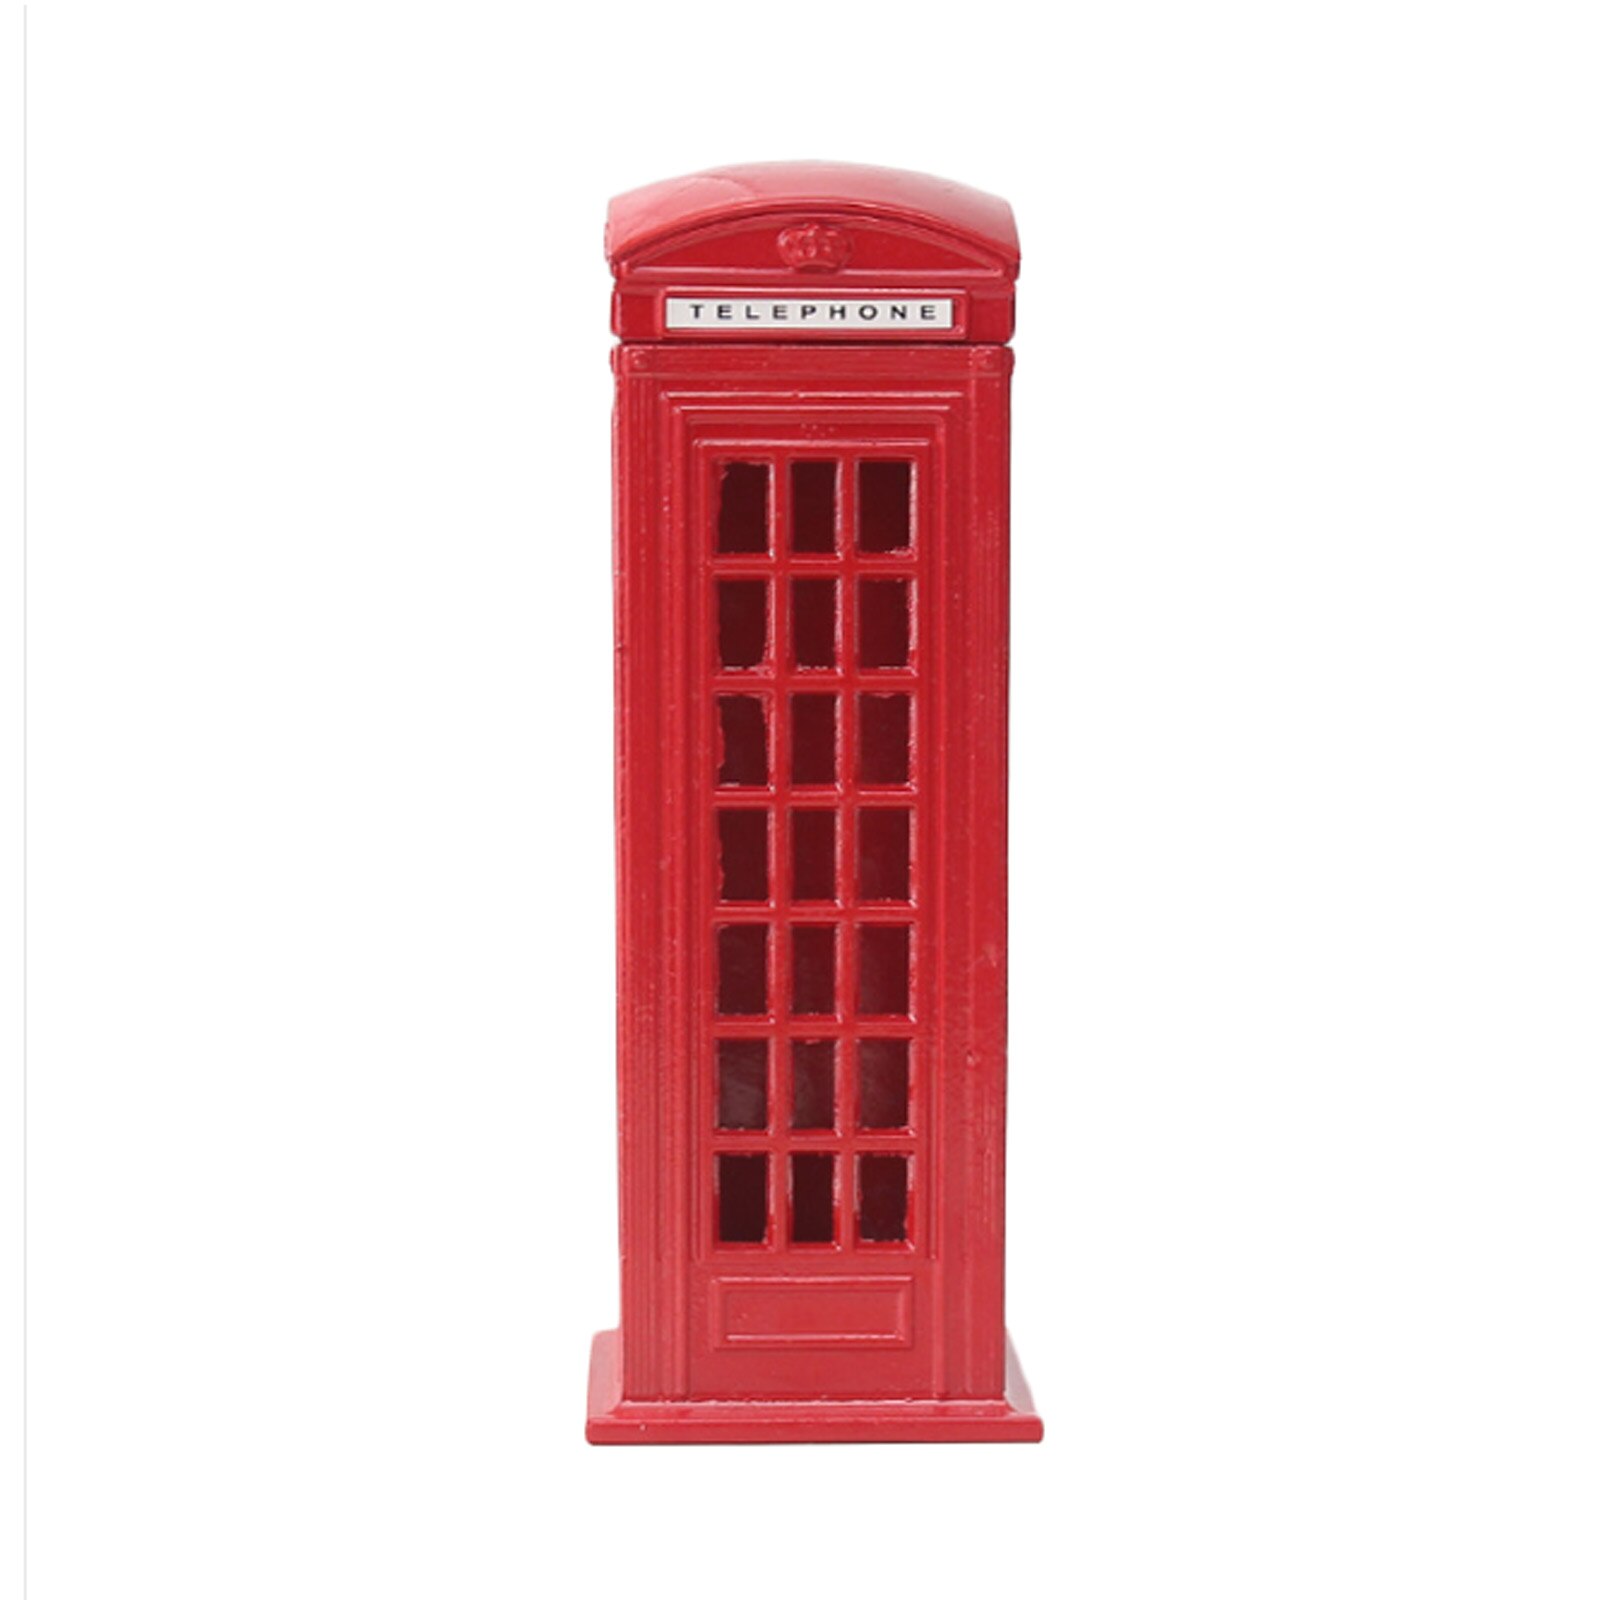 Legering engelsk london telefonboks bank møntbank sparekasse sparegris rød telefonboks: A1